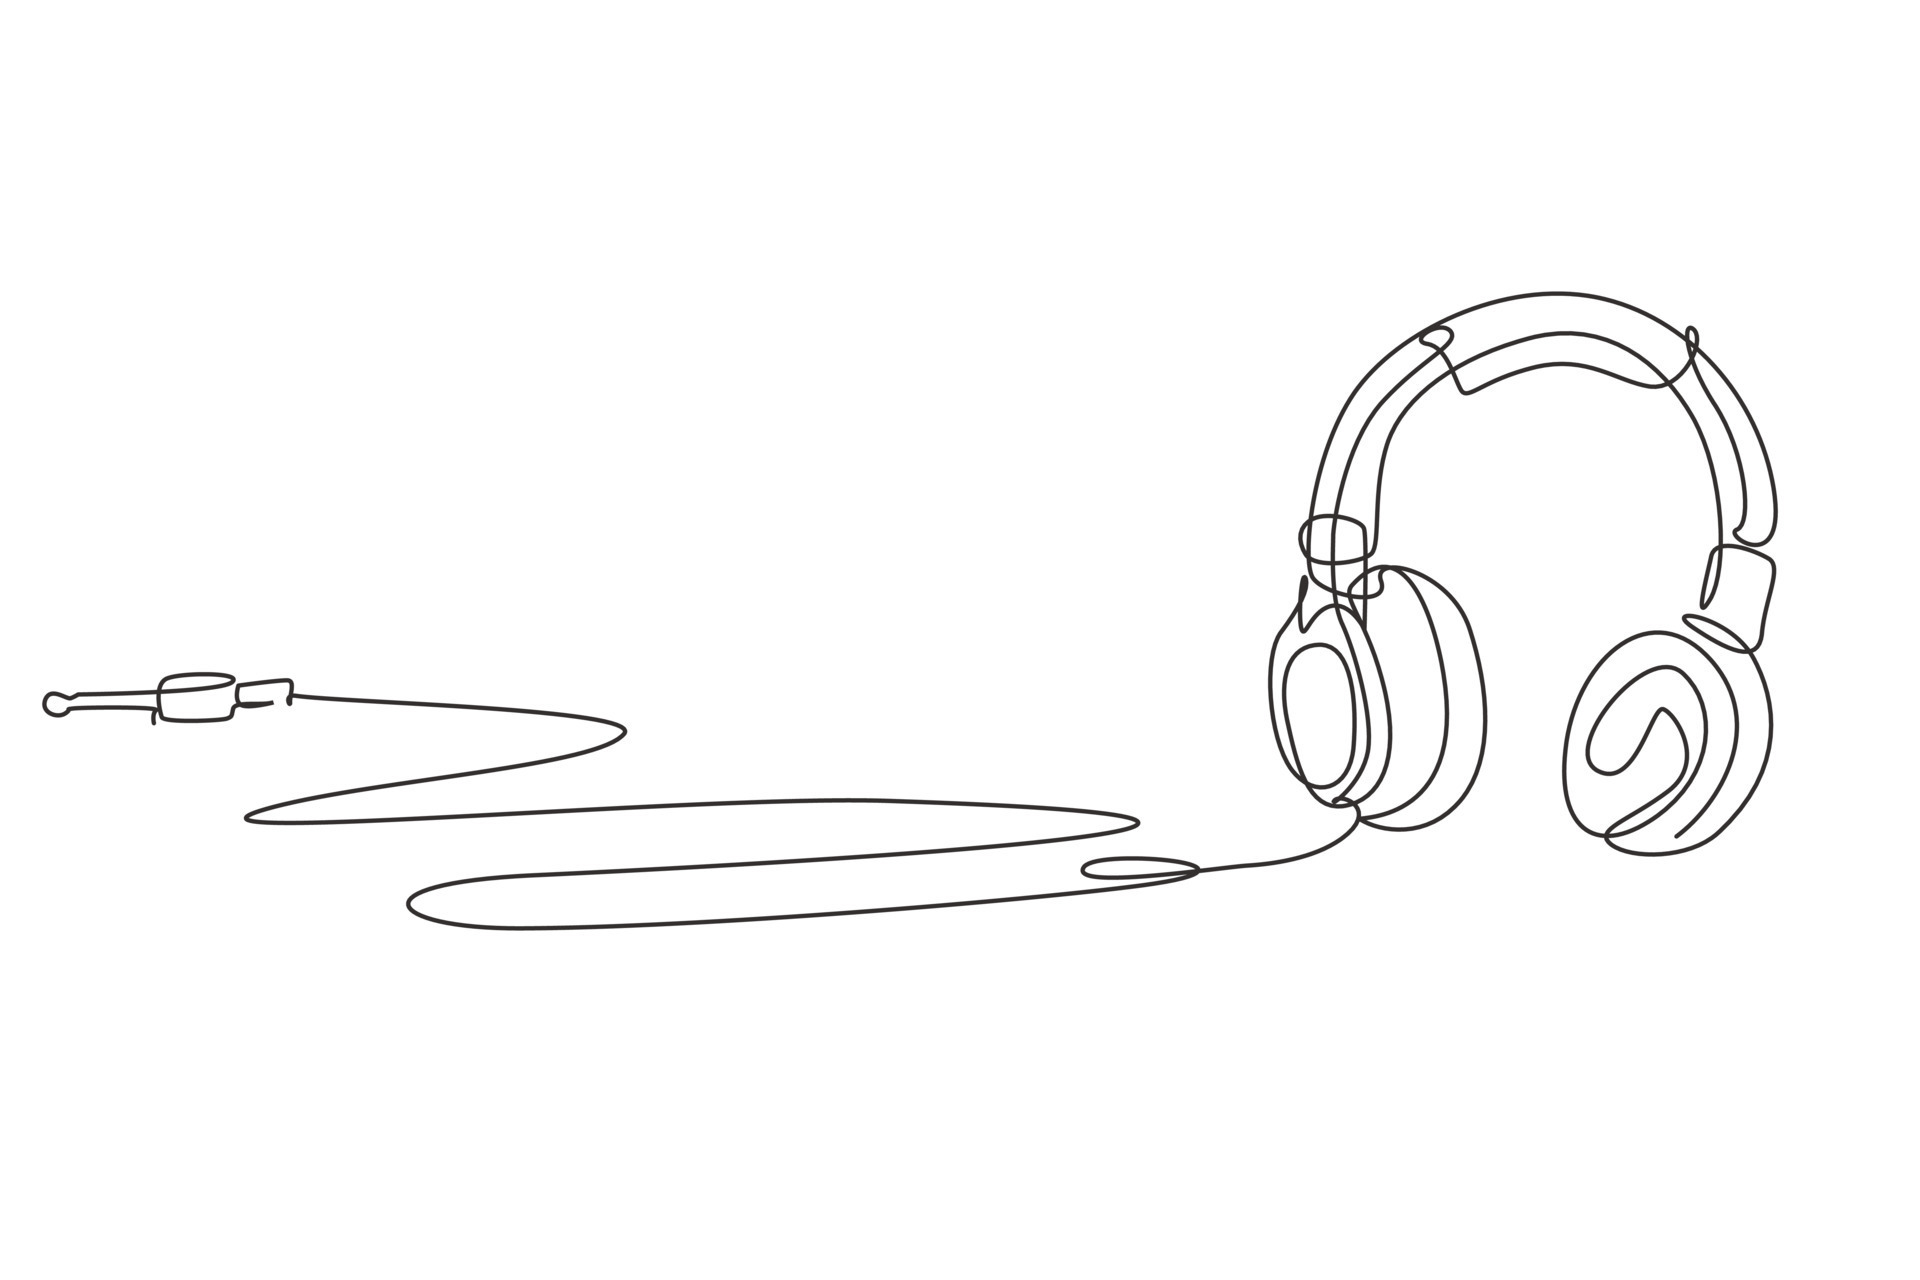 11100 Headphones Drawings Illustrations RoyaltyFree Vector Graphics   Clip Art  iStock